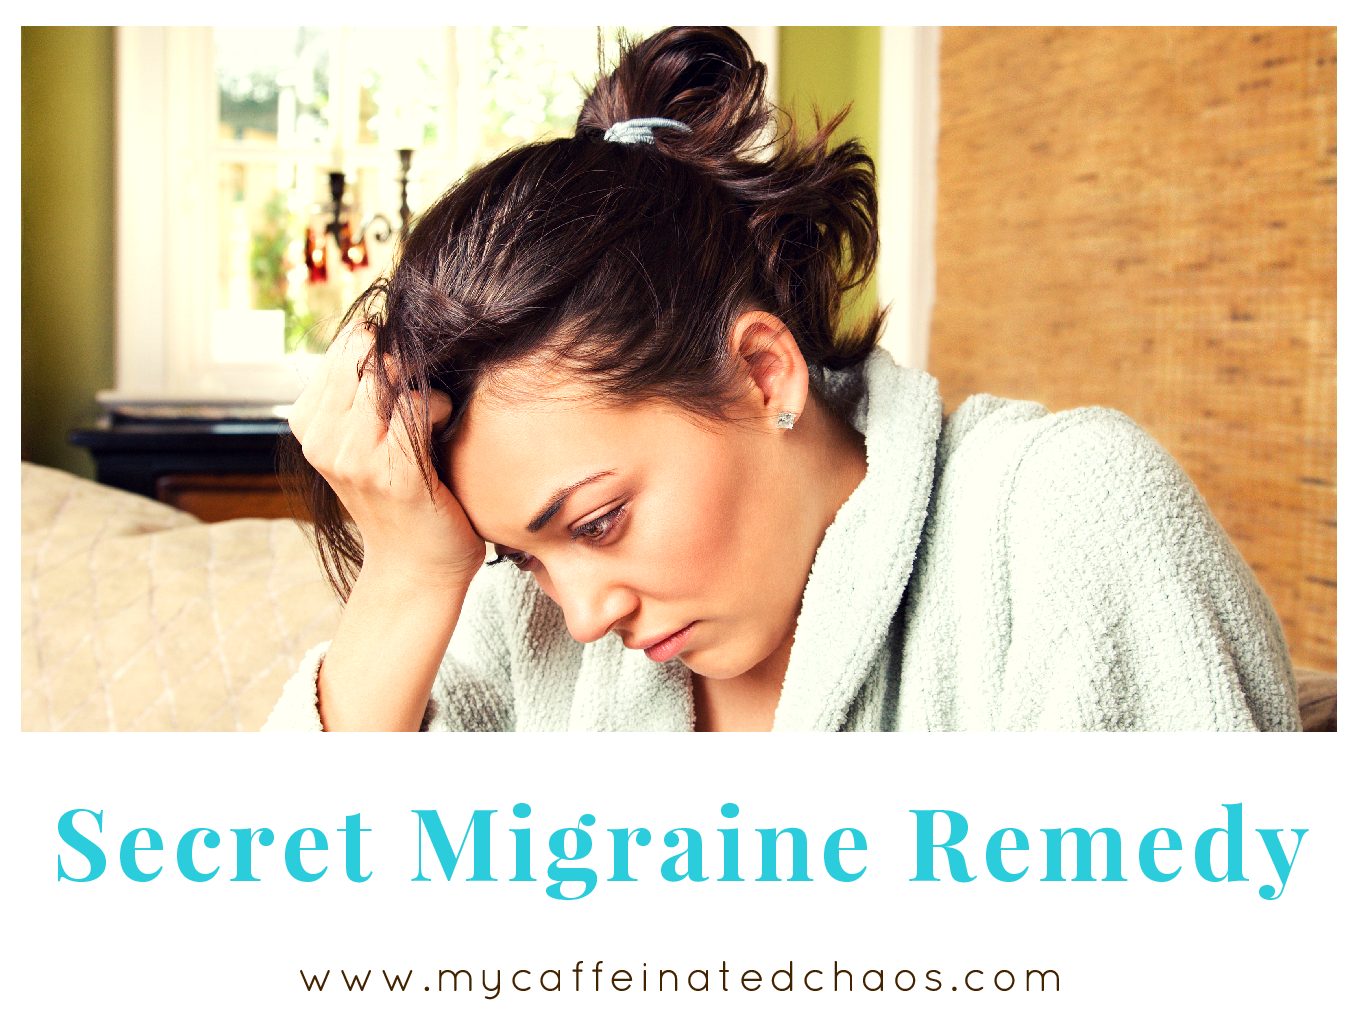 Secret Migraine Remedy